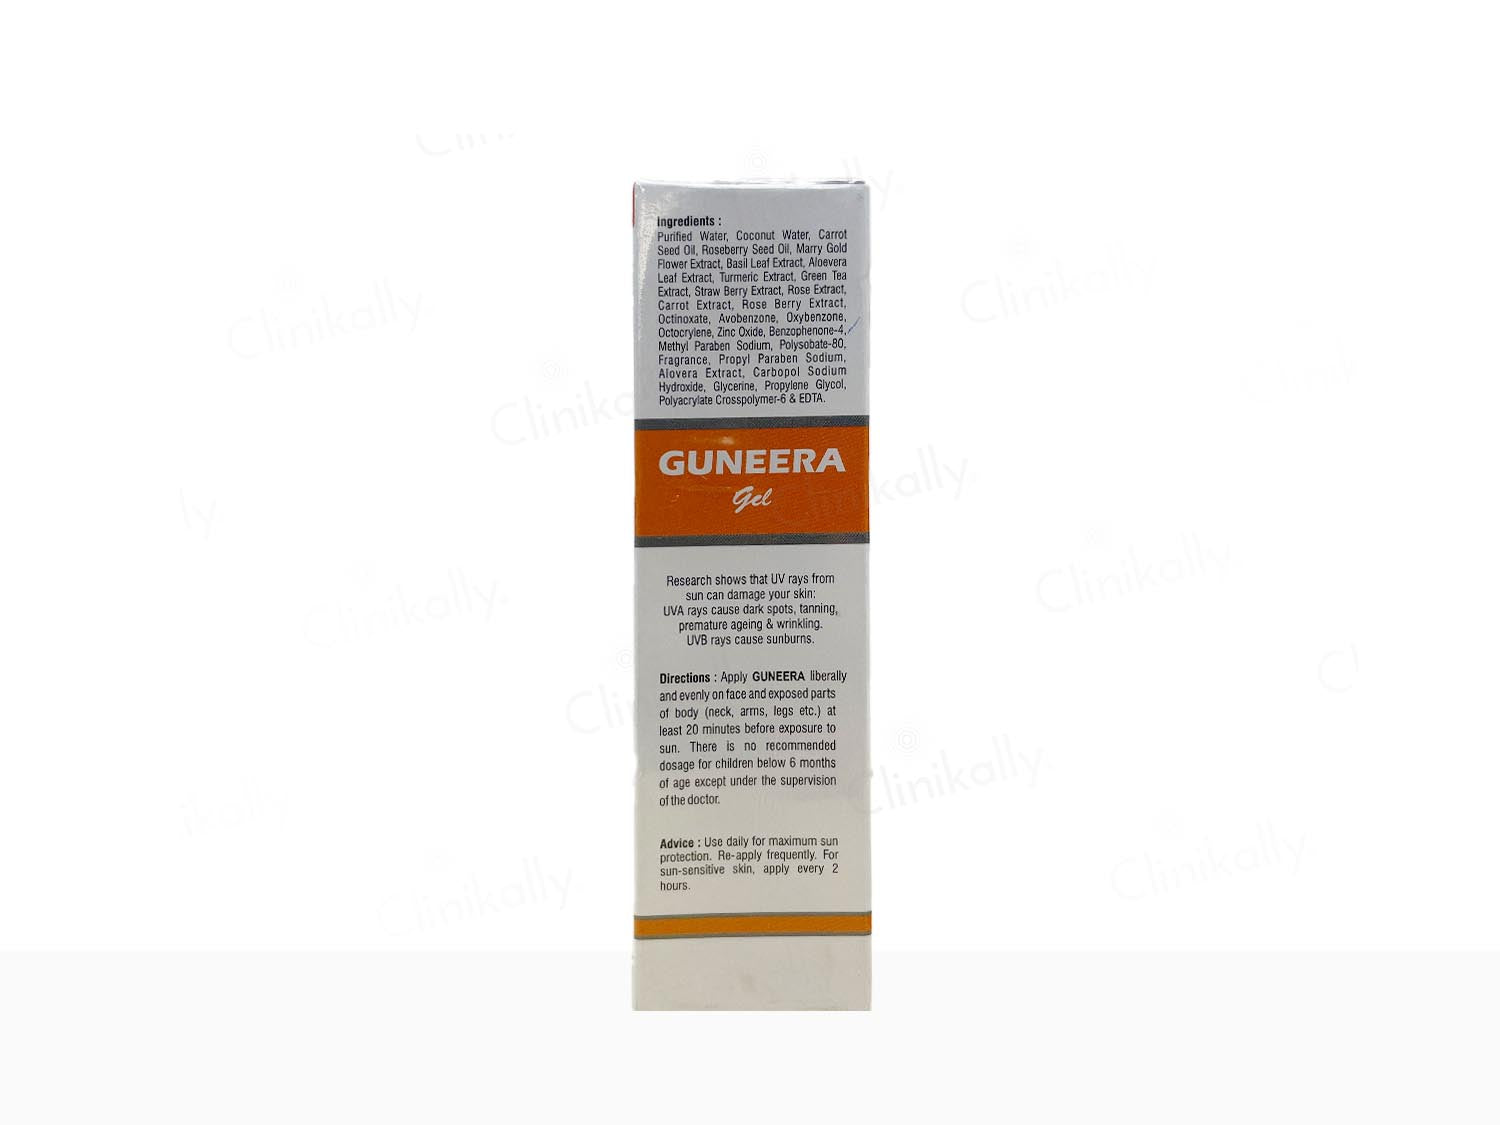 Guneera Sunscreen Gel SPF 50-Clinikally